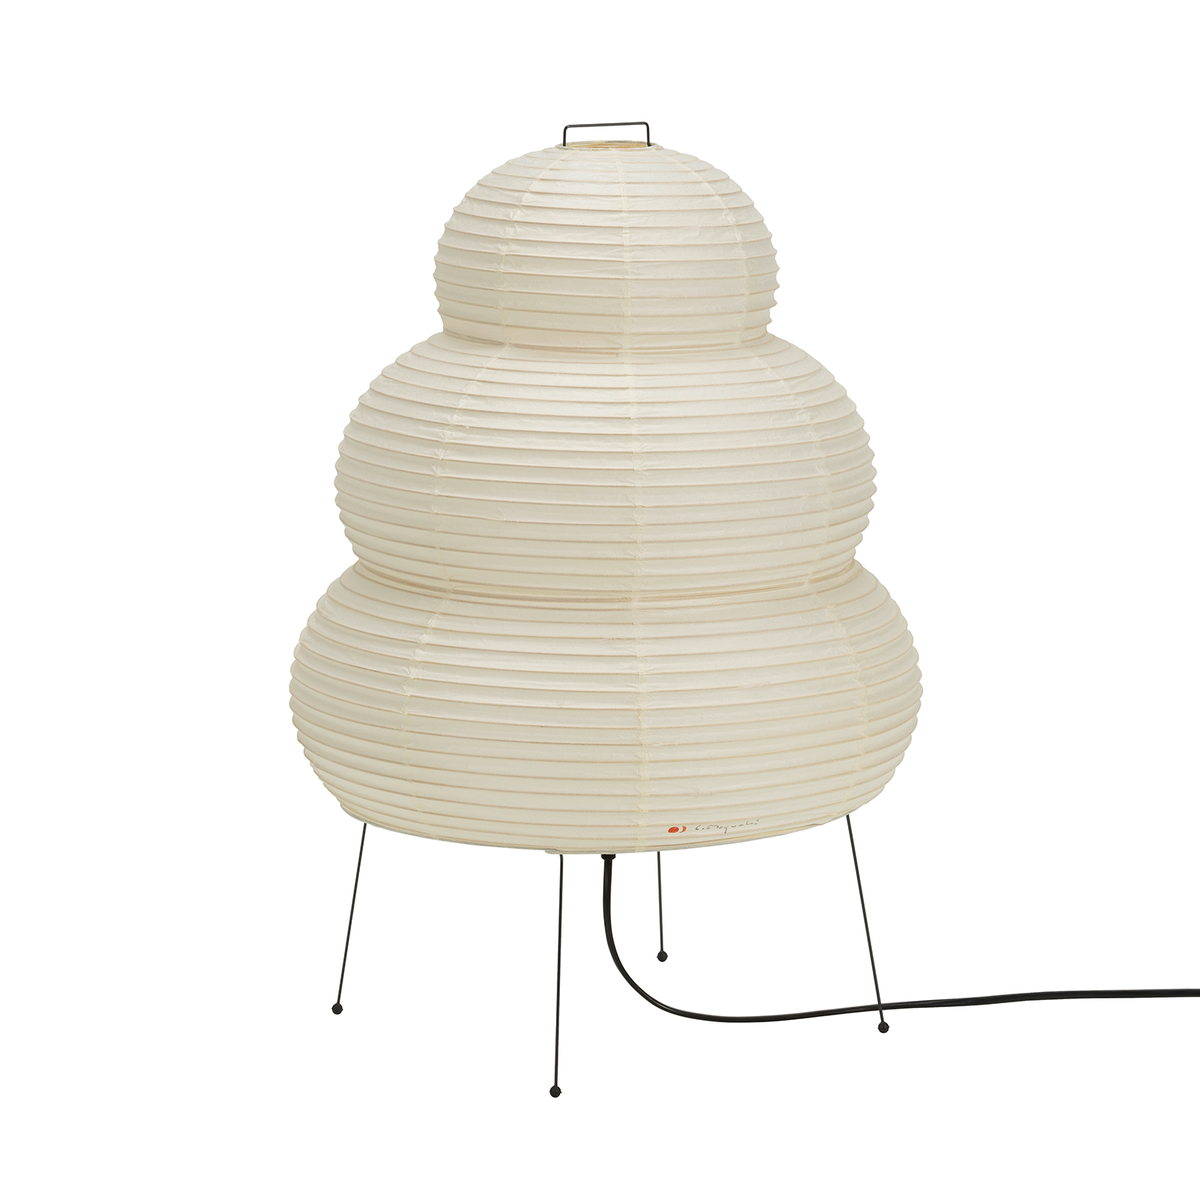 ISAMU NOGUCHI AKARI 1AD Table Light F/S from Japan Exchange Shade Lamp 